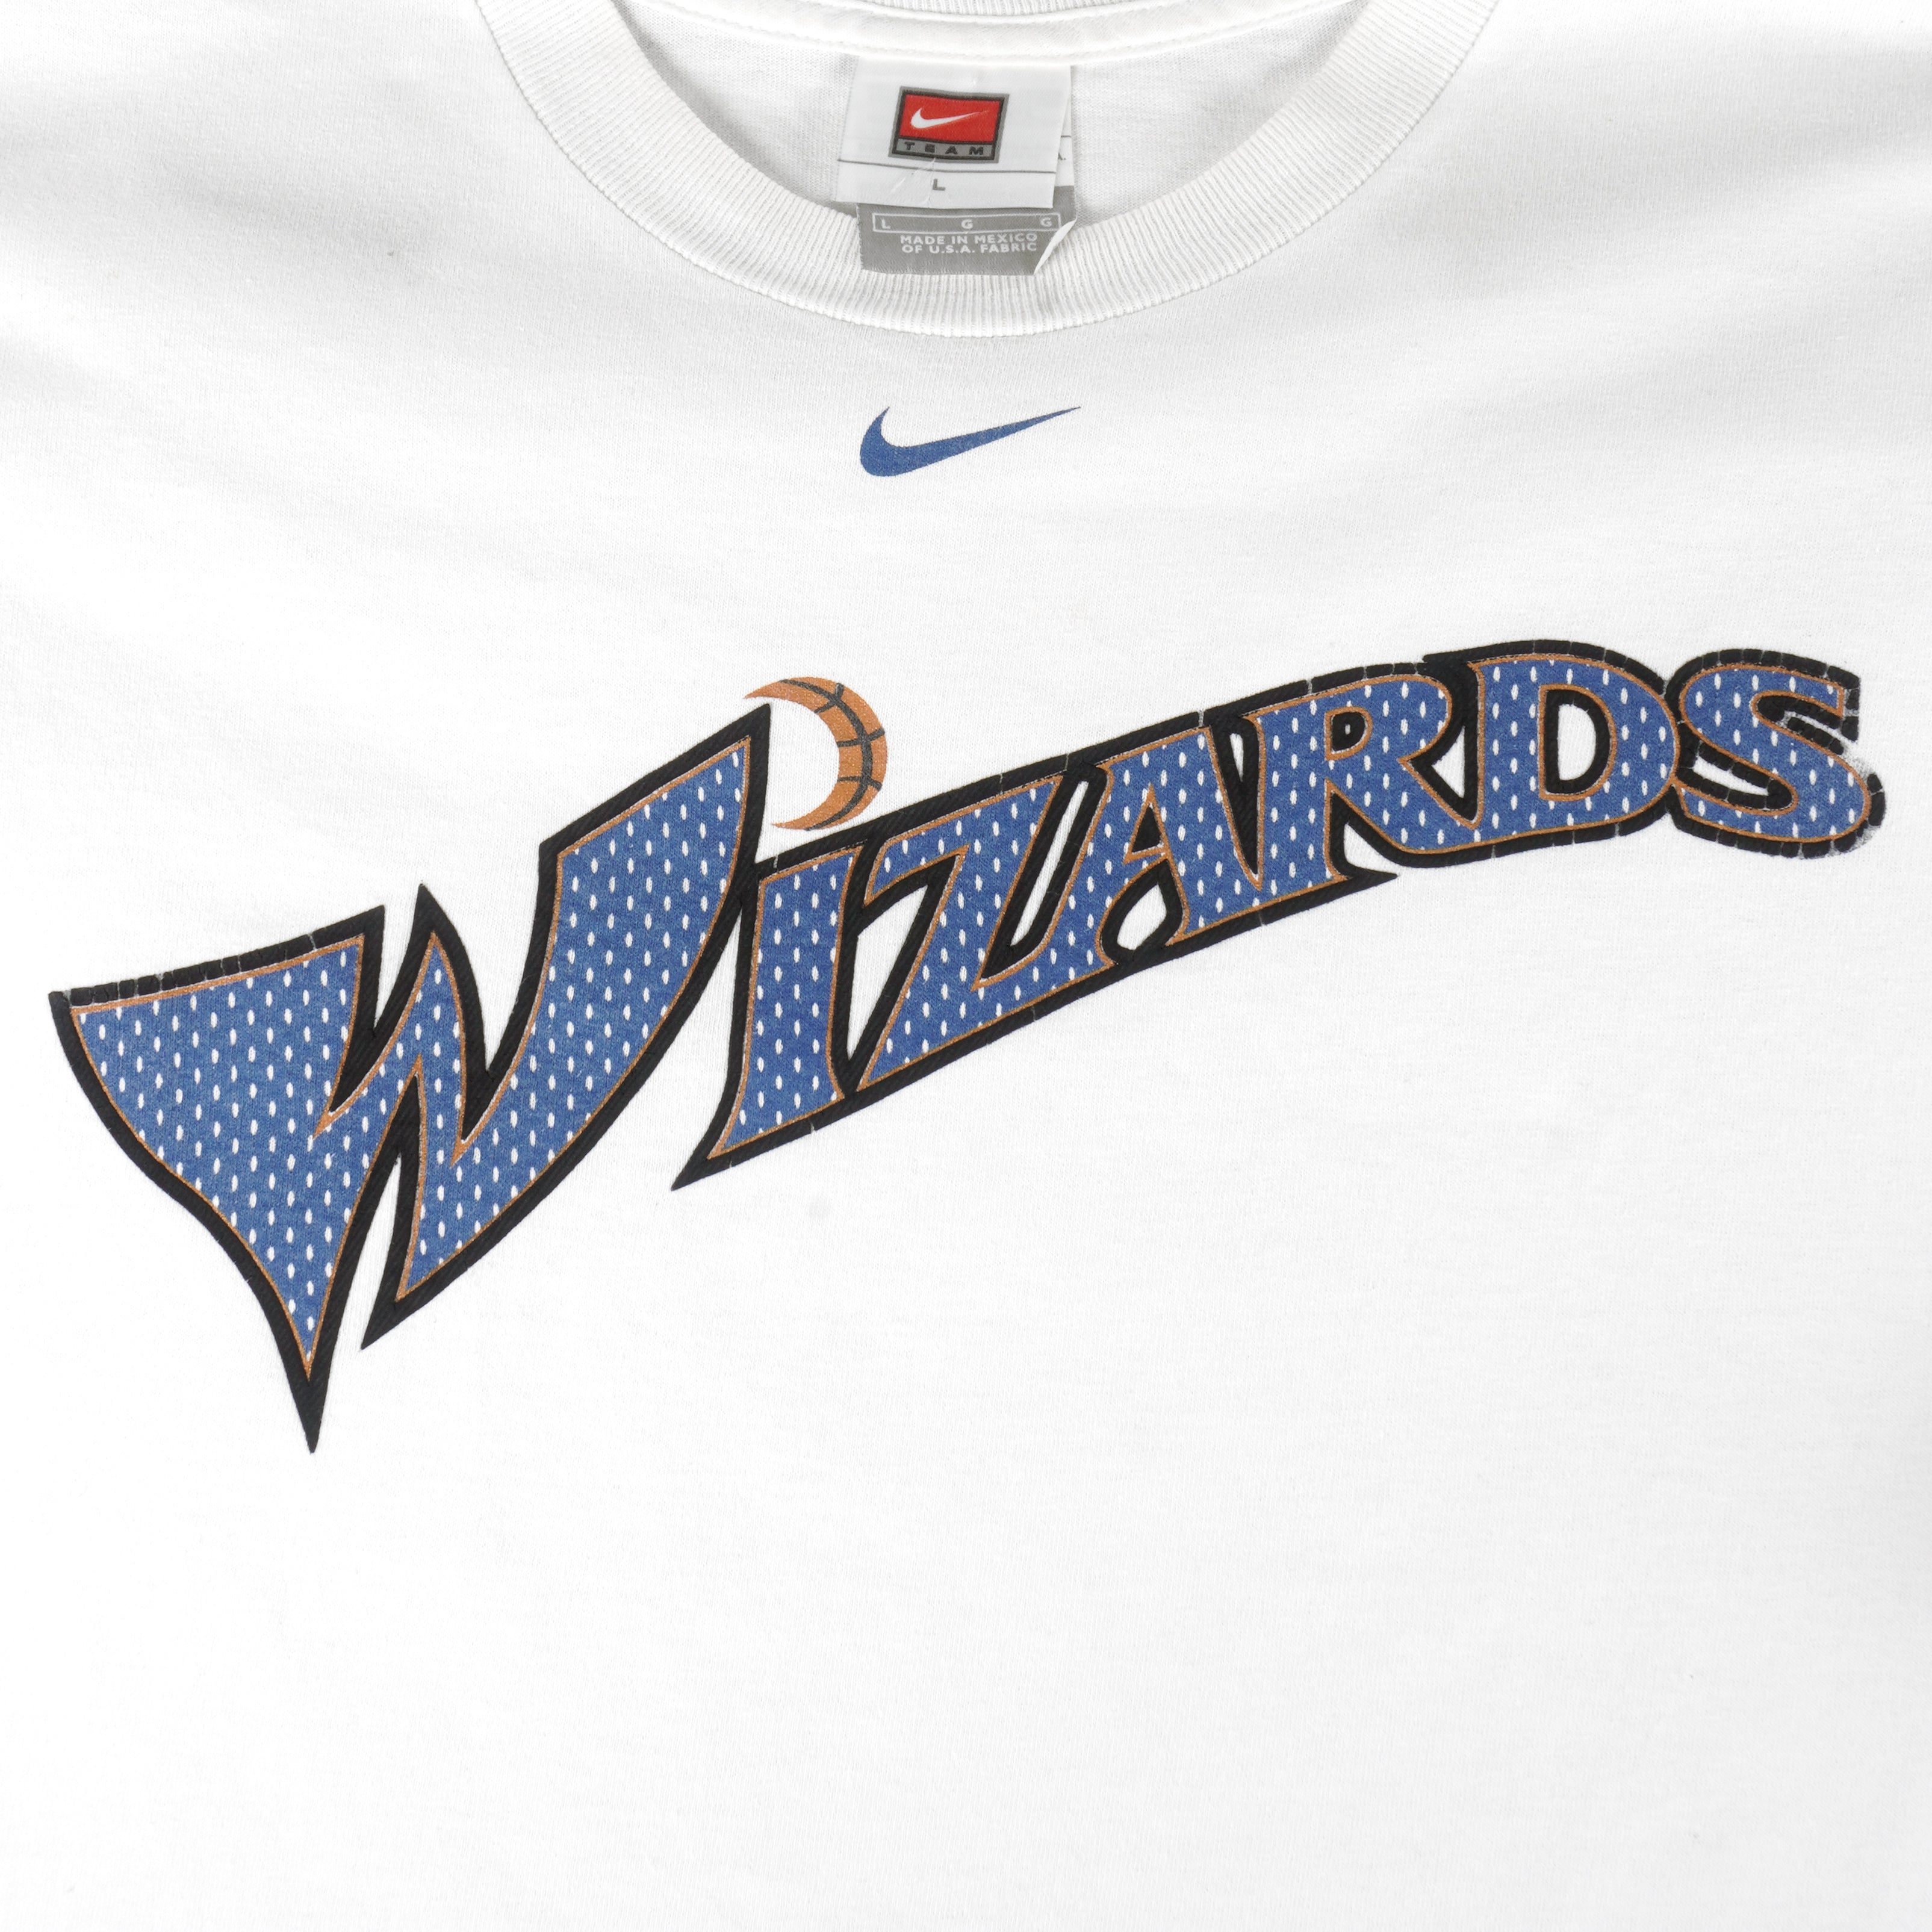 Washington Wizards Gear, Wizards Jerseys, Store, Wizards Pro Shop, Apparel